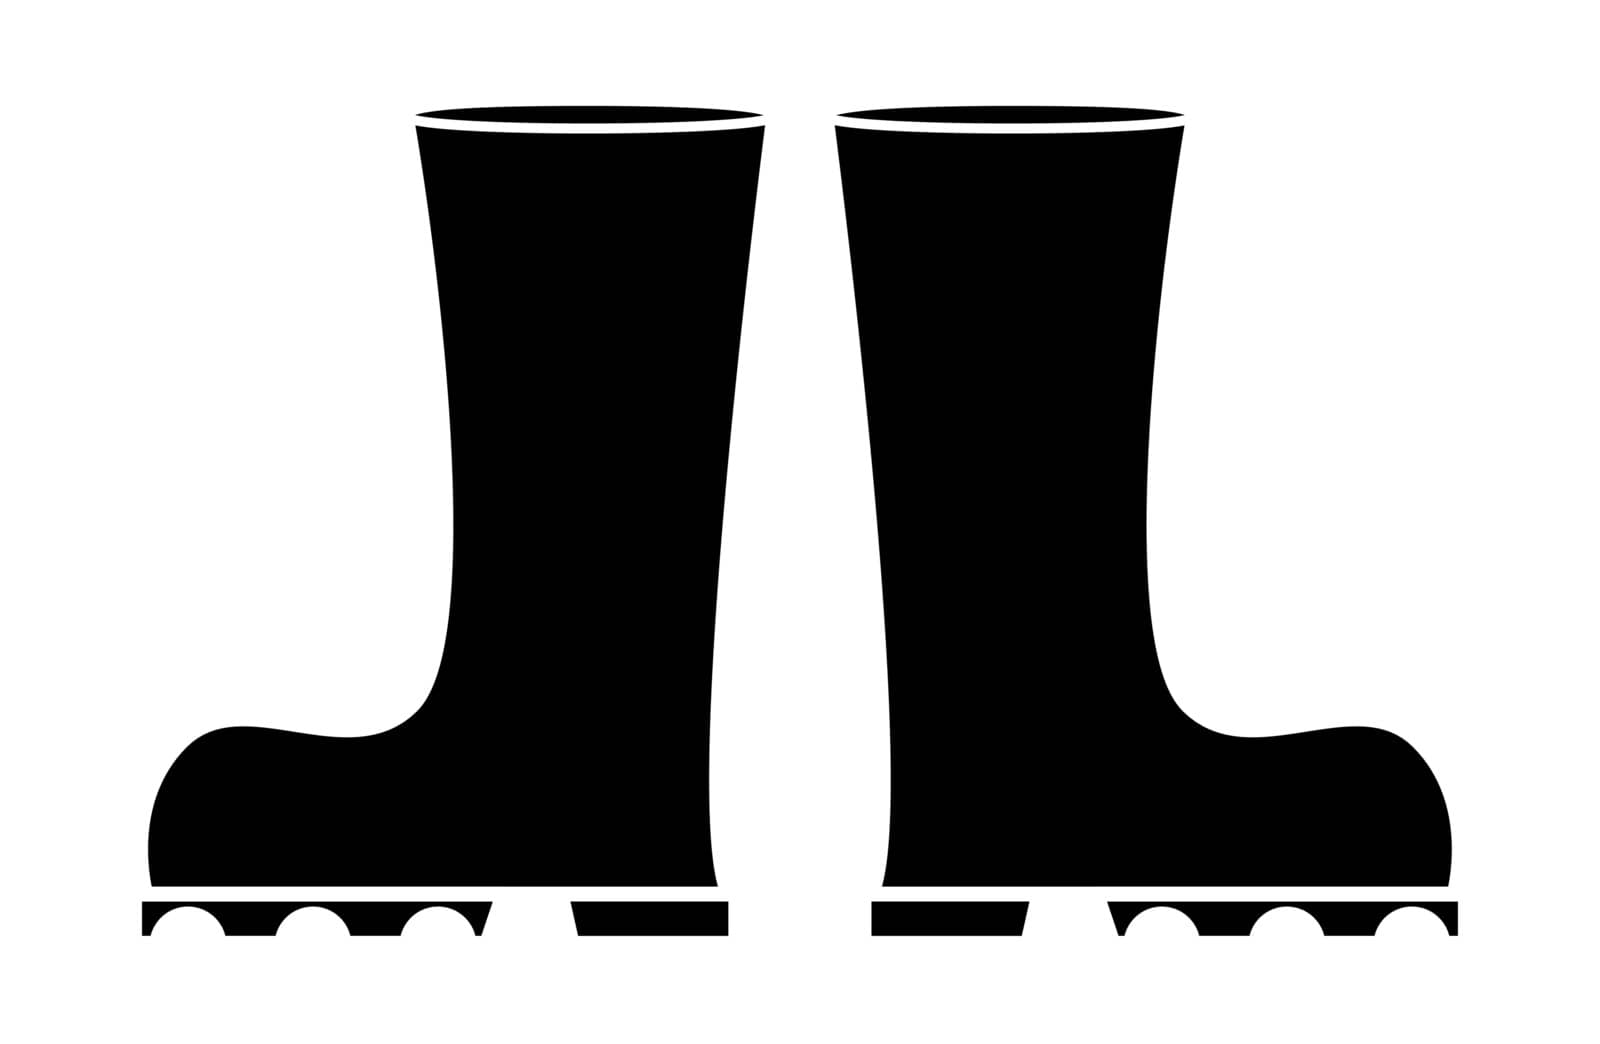 Wellington boot silhouette illustration isolated on white backgr by wektorygrafika